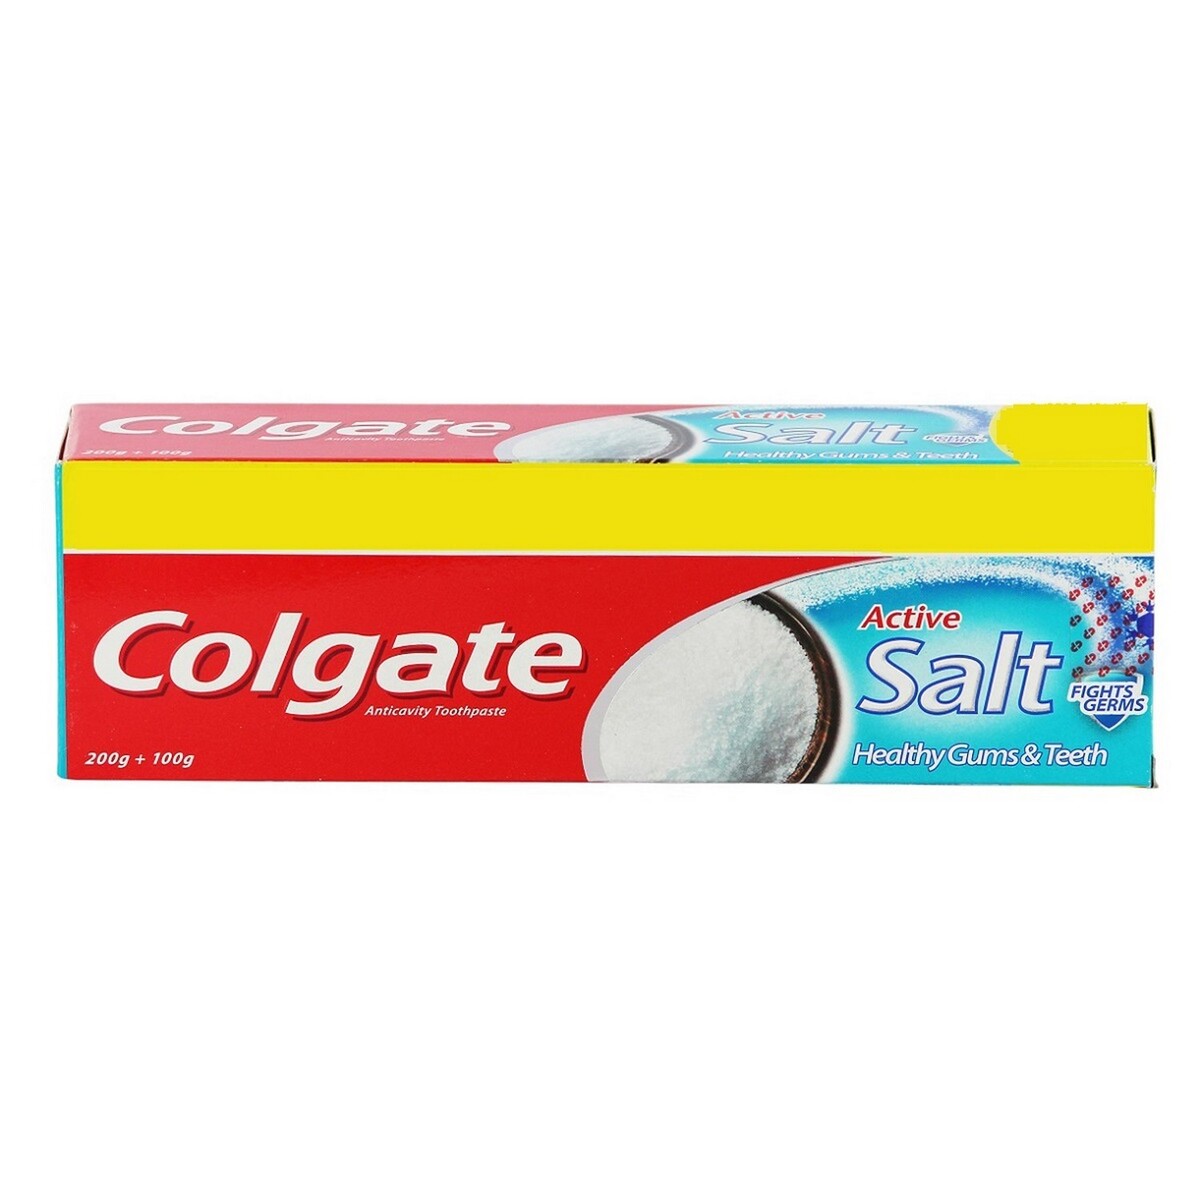 Colgate Tooth Paste  Active Salt 200g + 100g